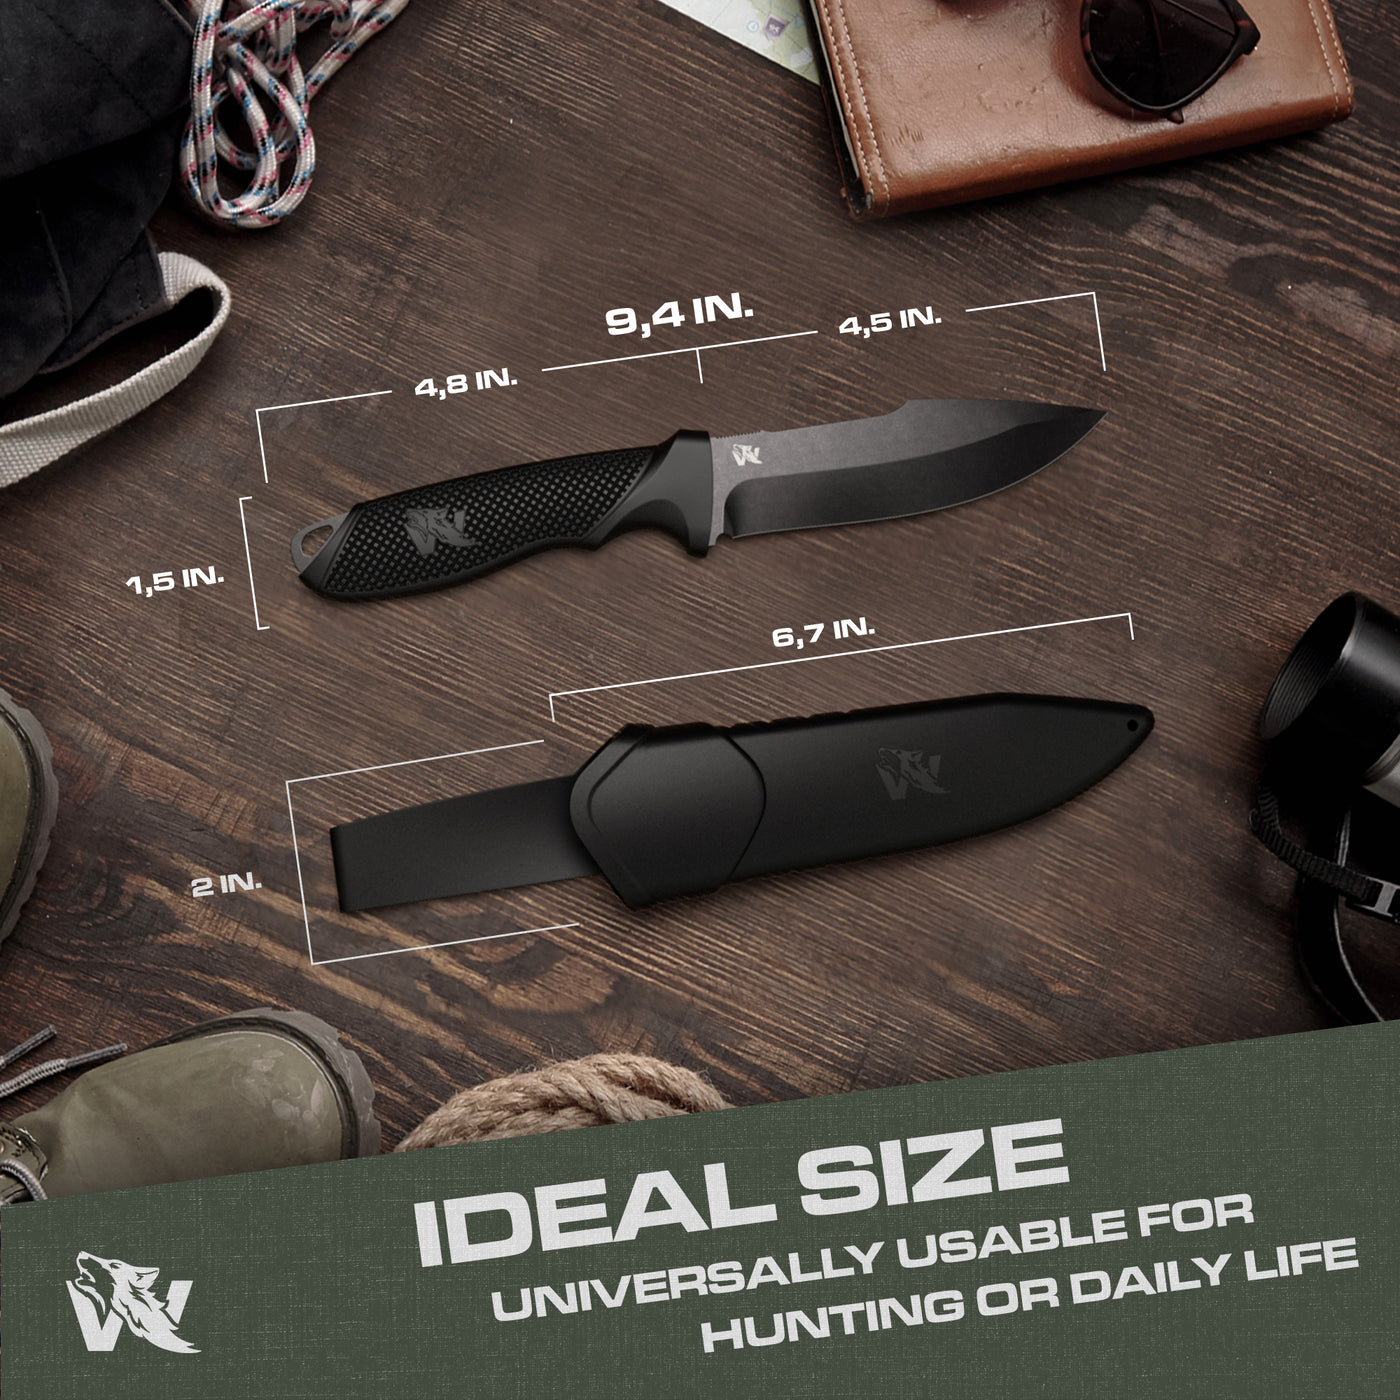 Hunter outdoor knife